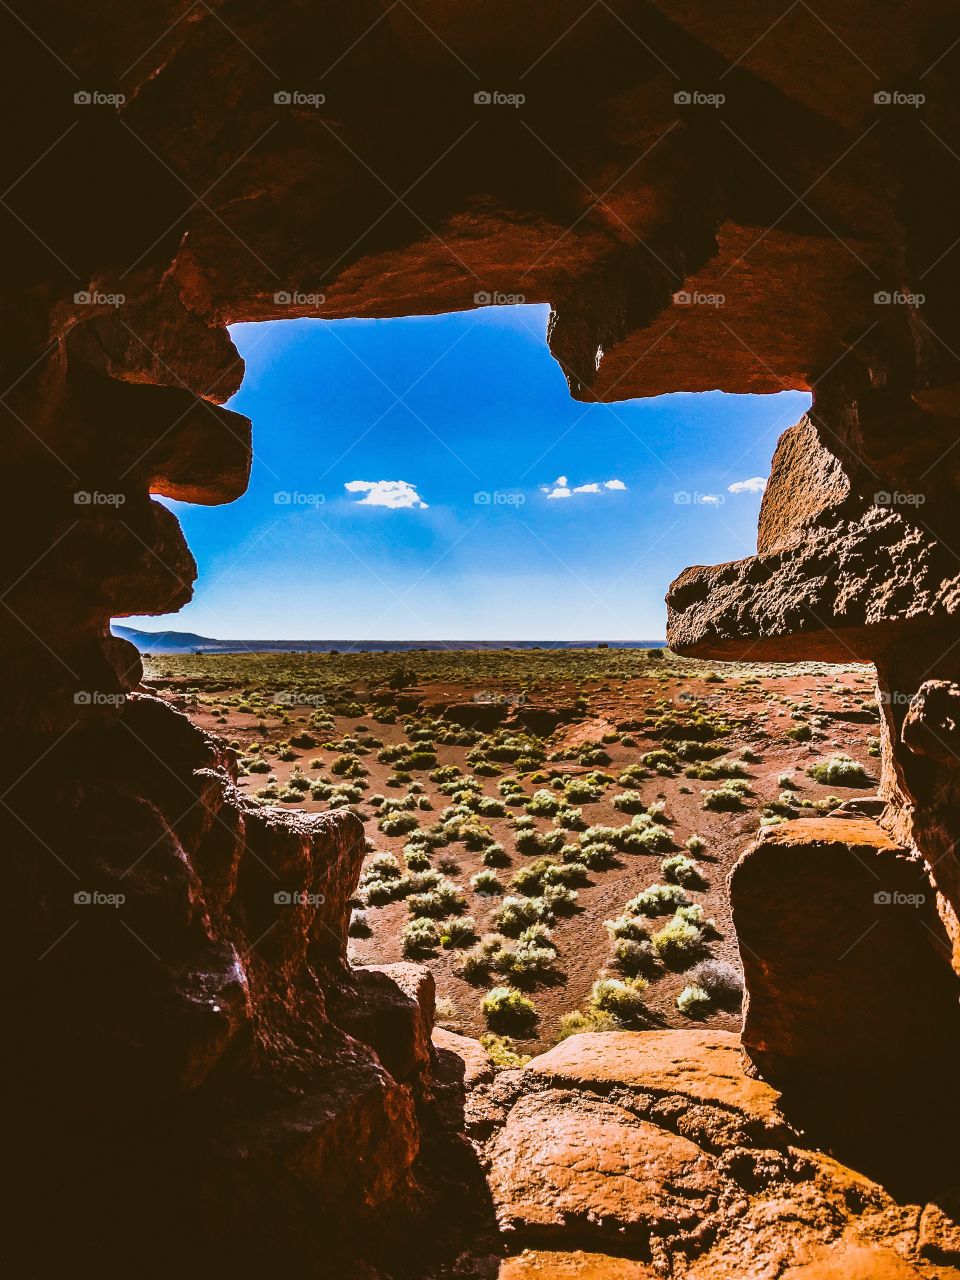 View of Arizona desert through the window of a Pueblo ruin